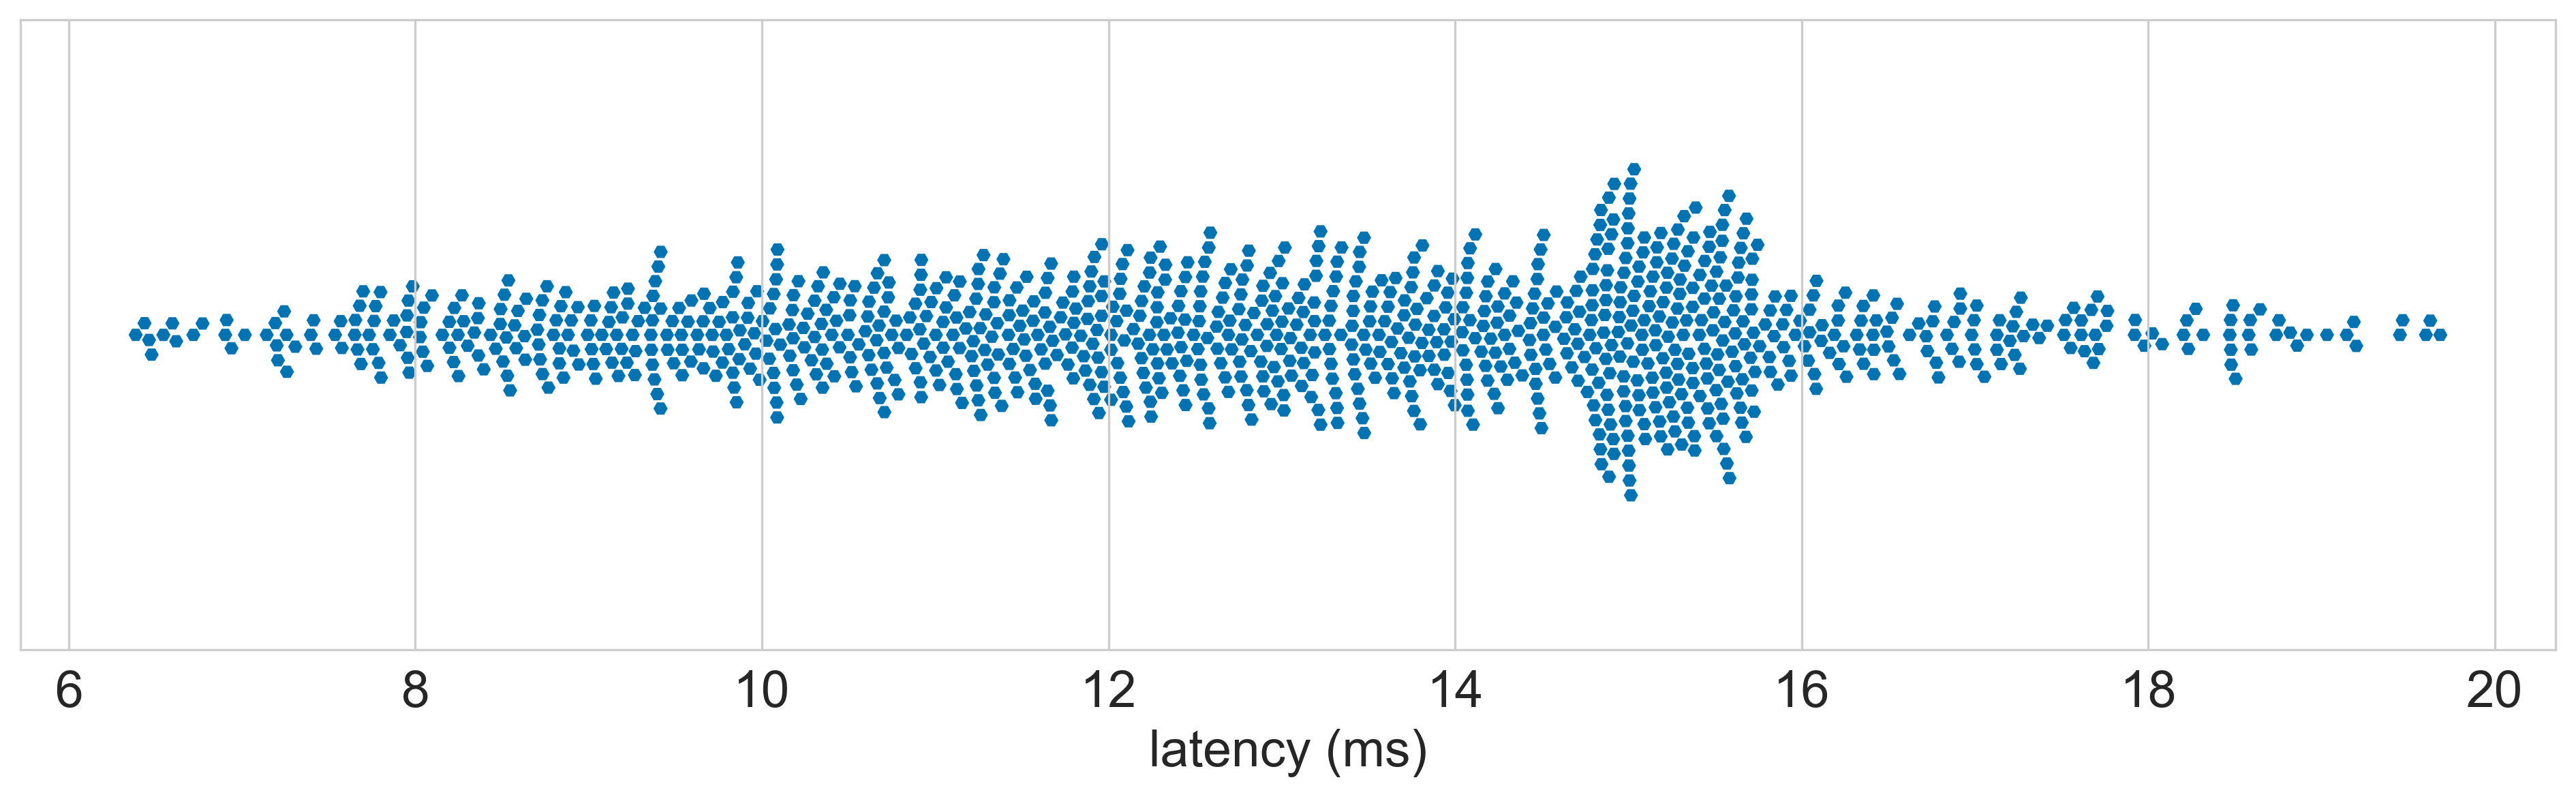 Logitech_USB-PS_2_Optical_Mouse latency distribution 